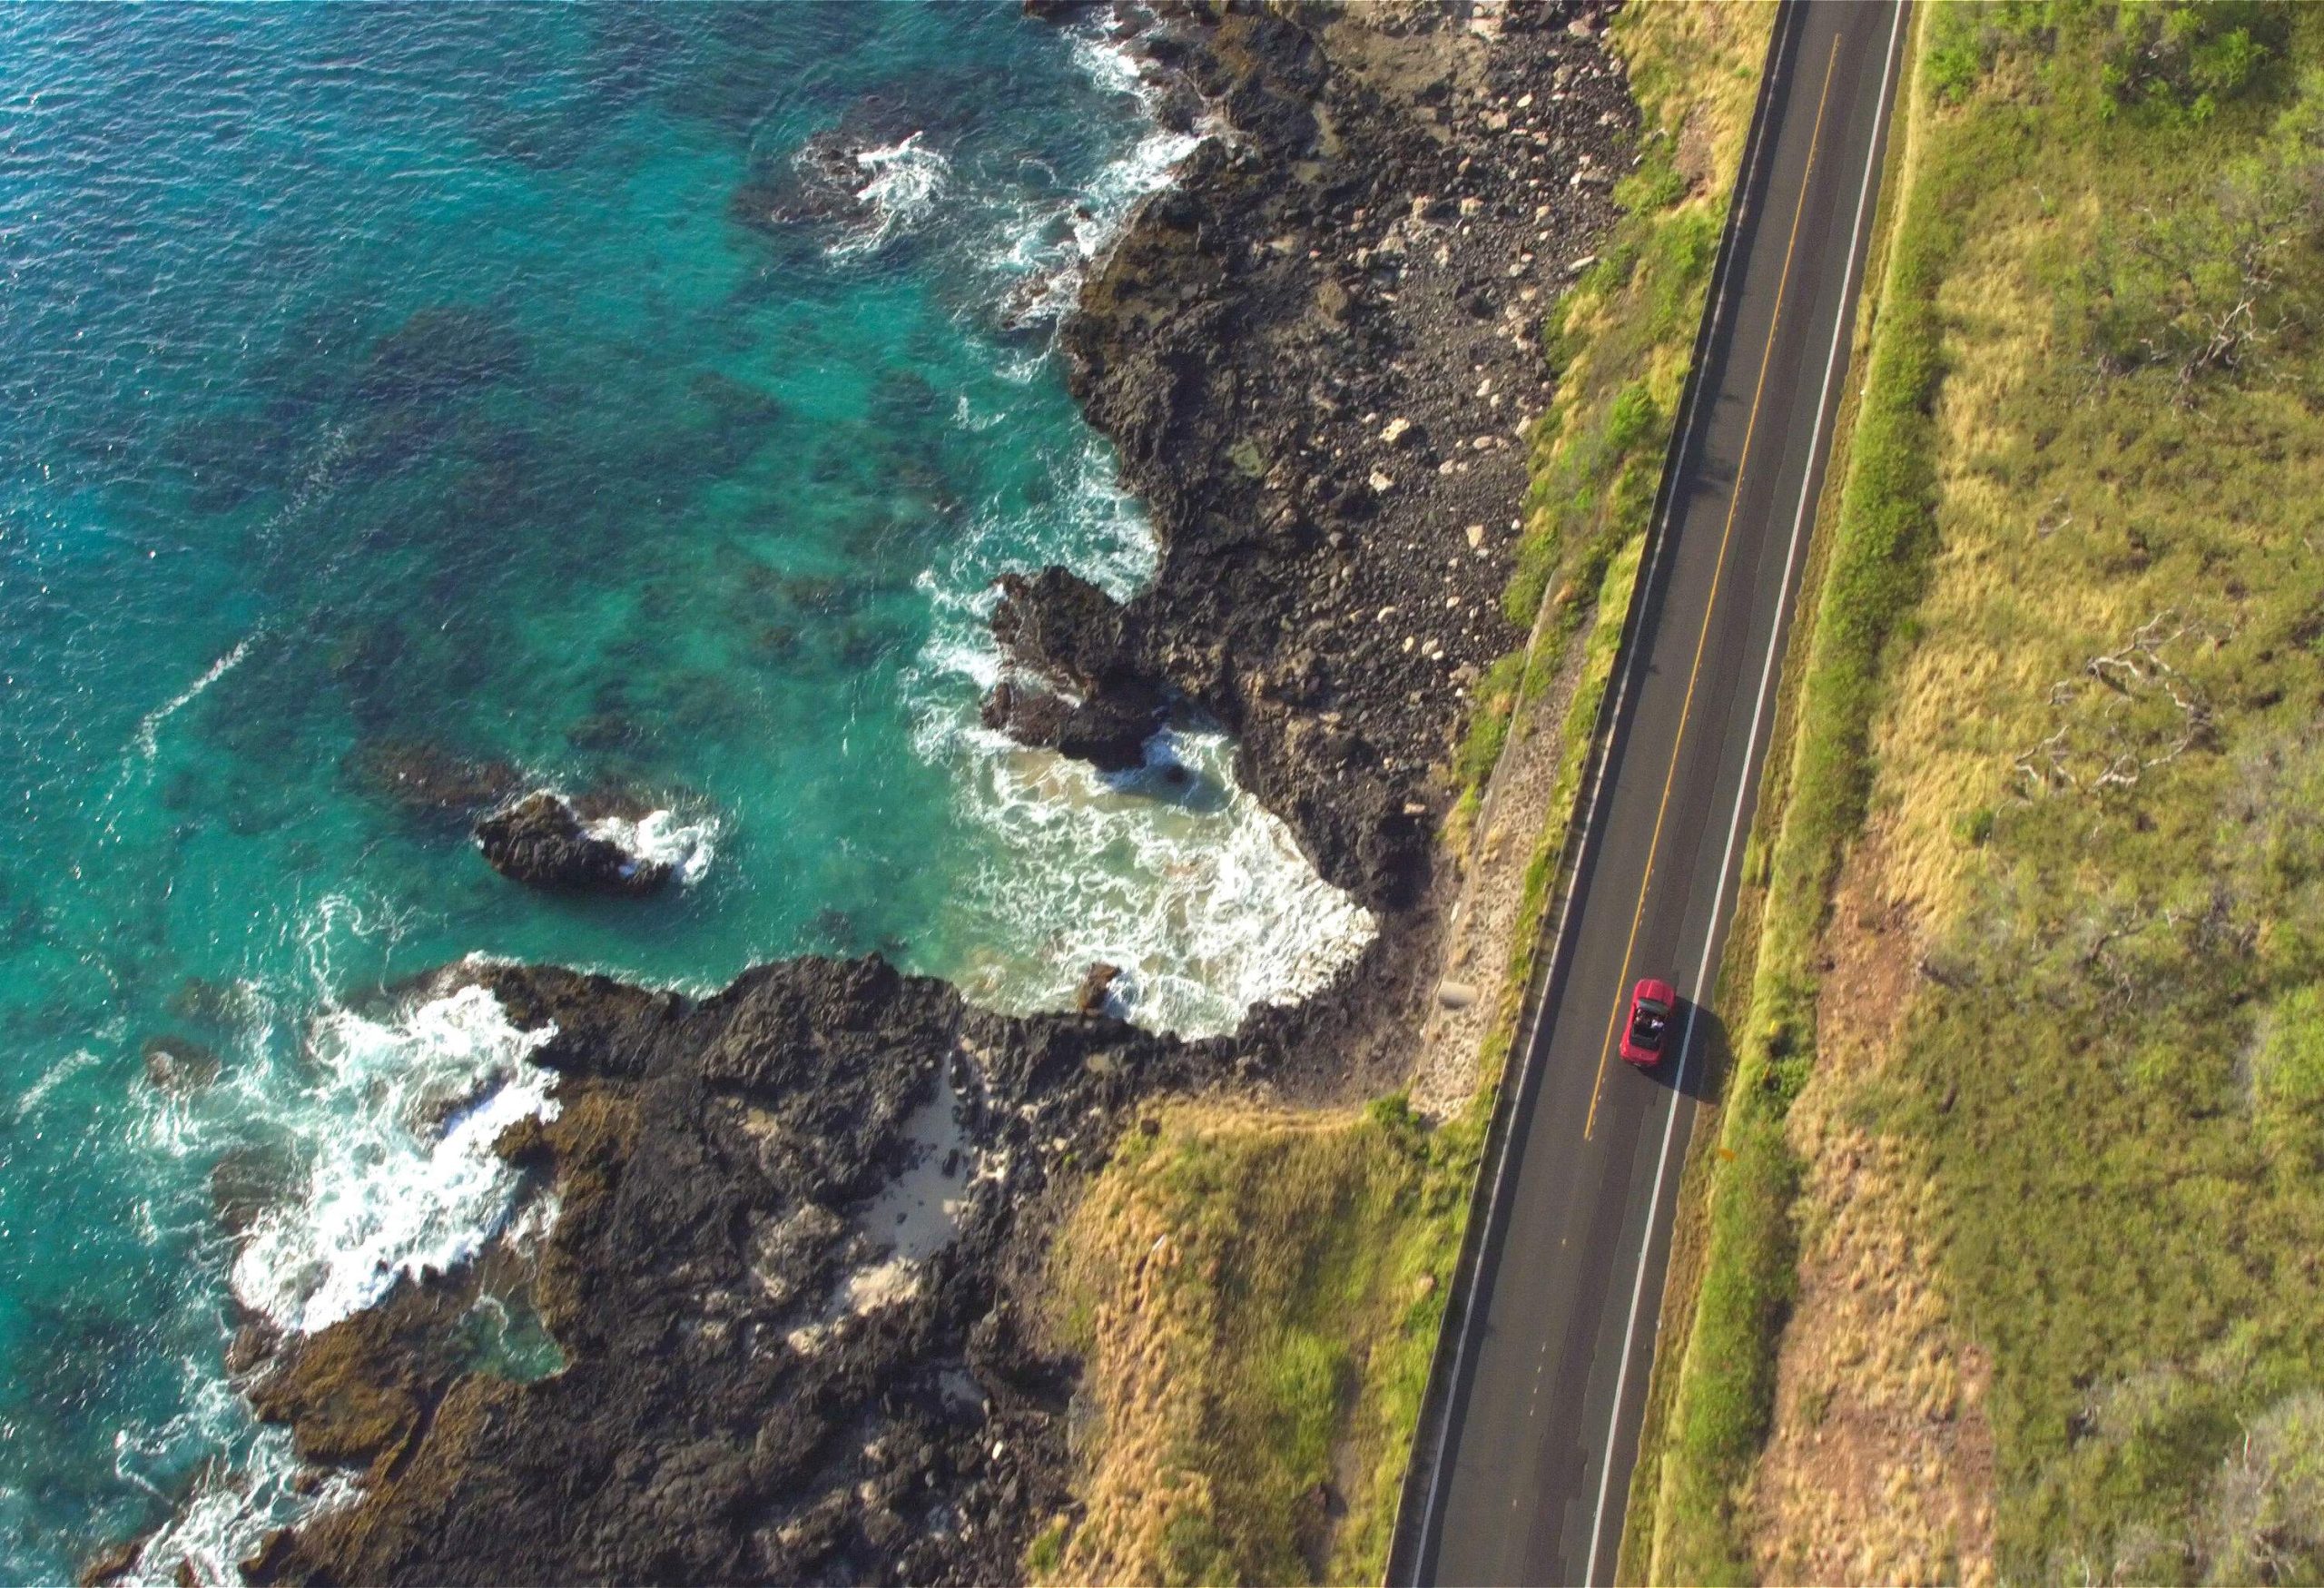 A car travels on a coastal road along a rocky beach with crashing waves.